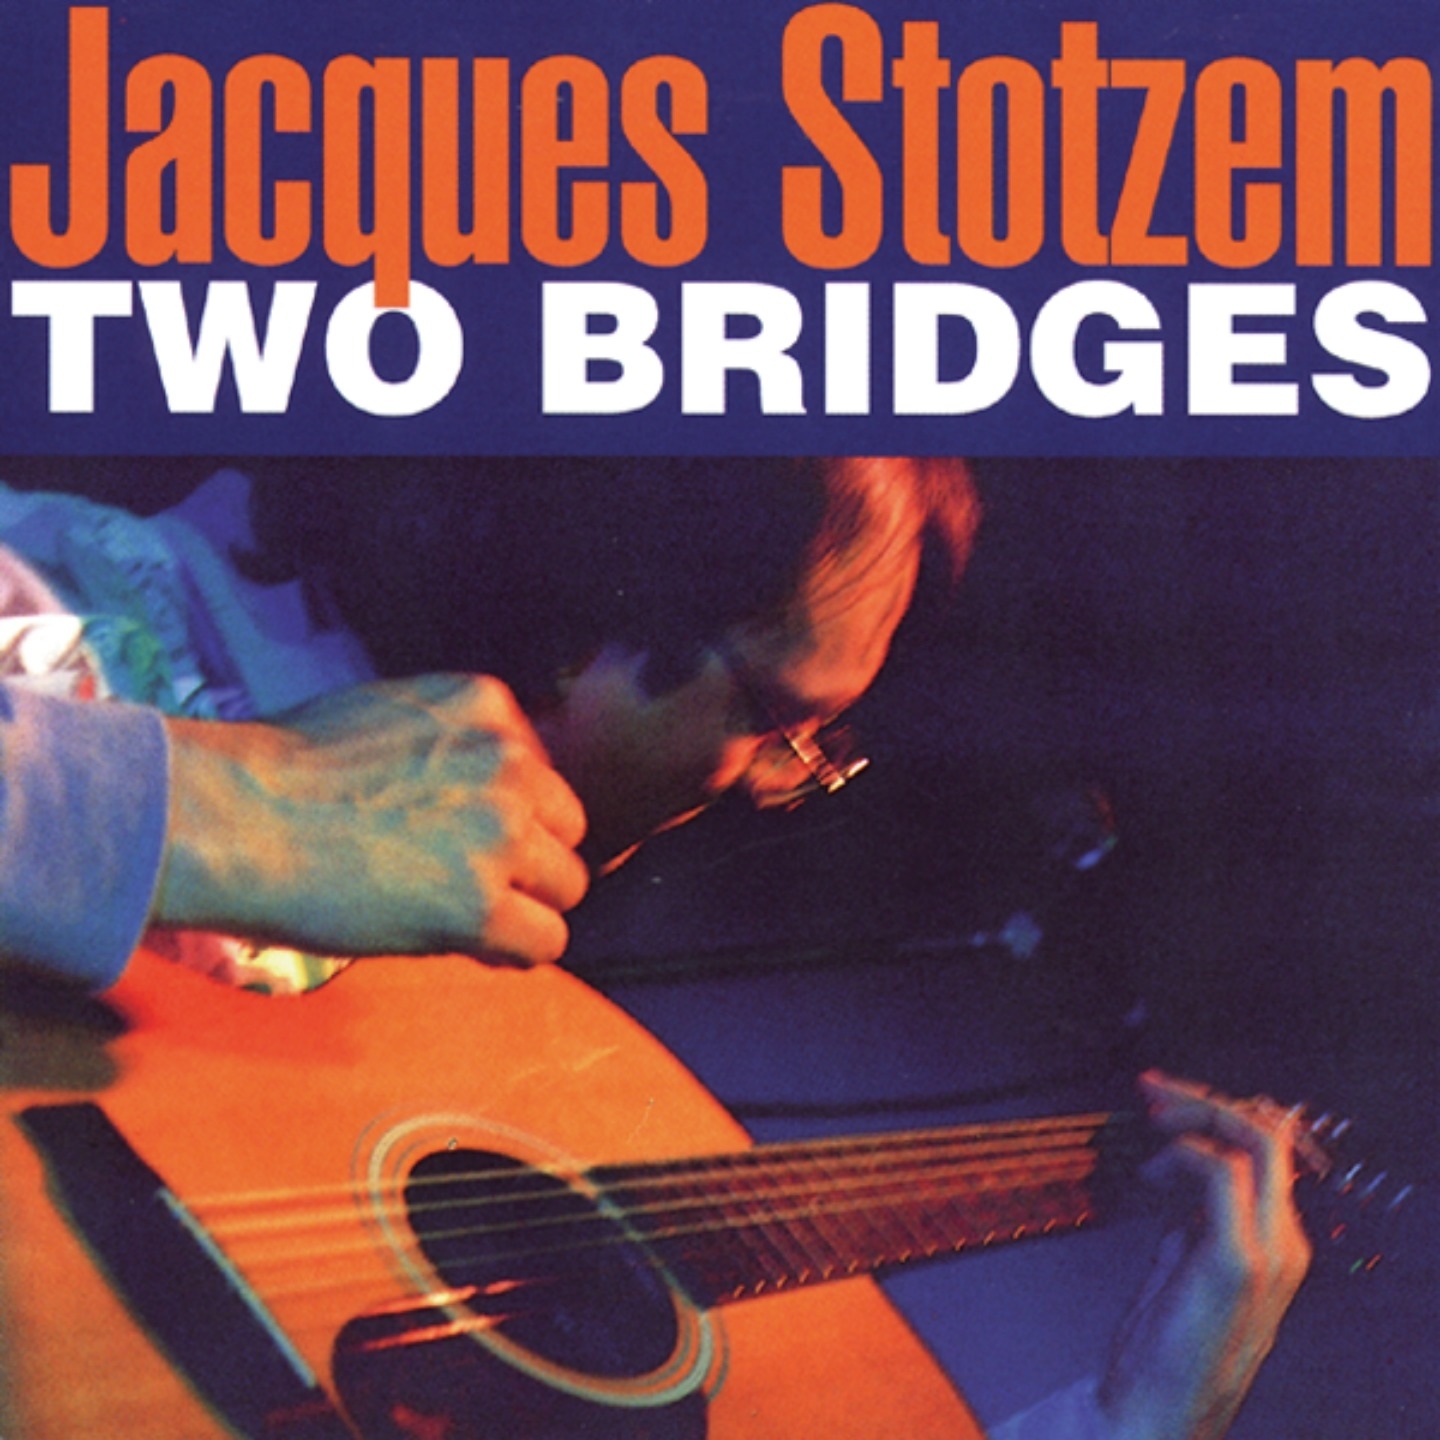 Two Bridges